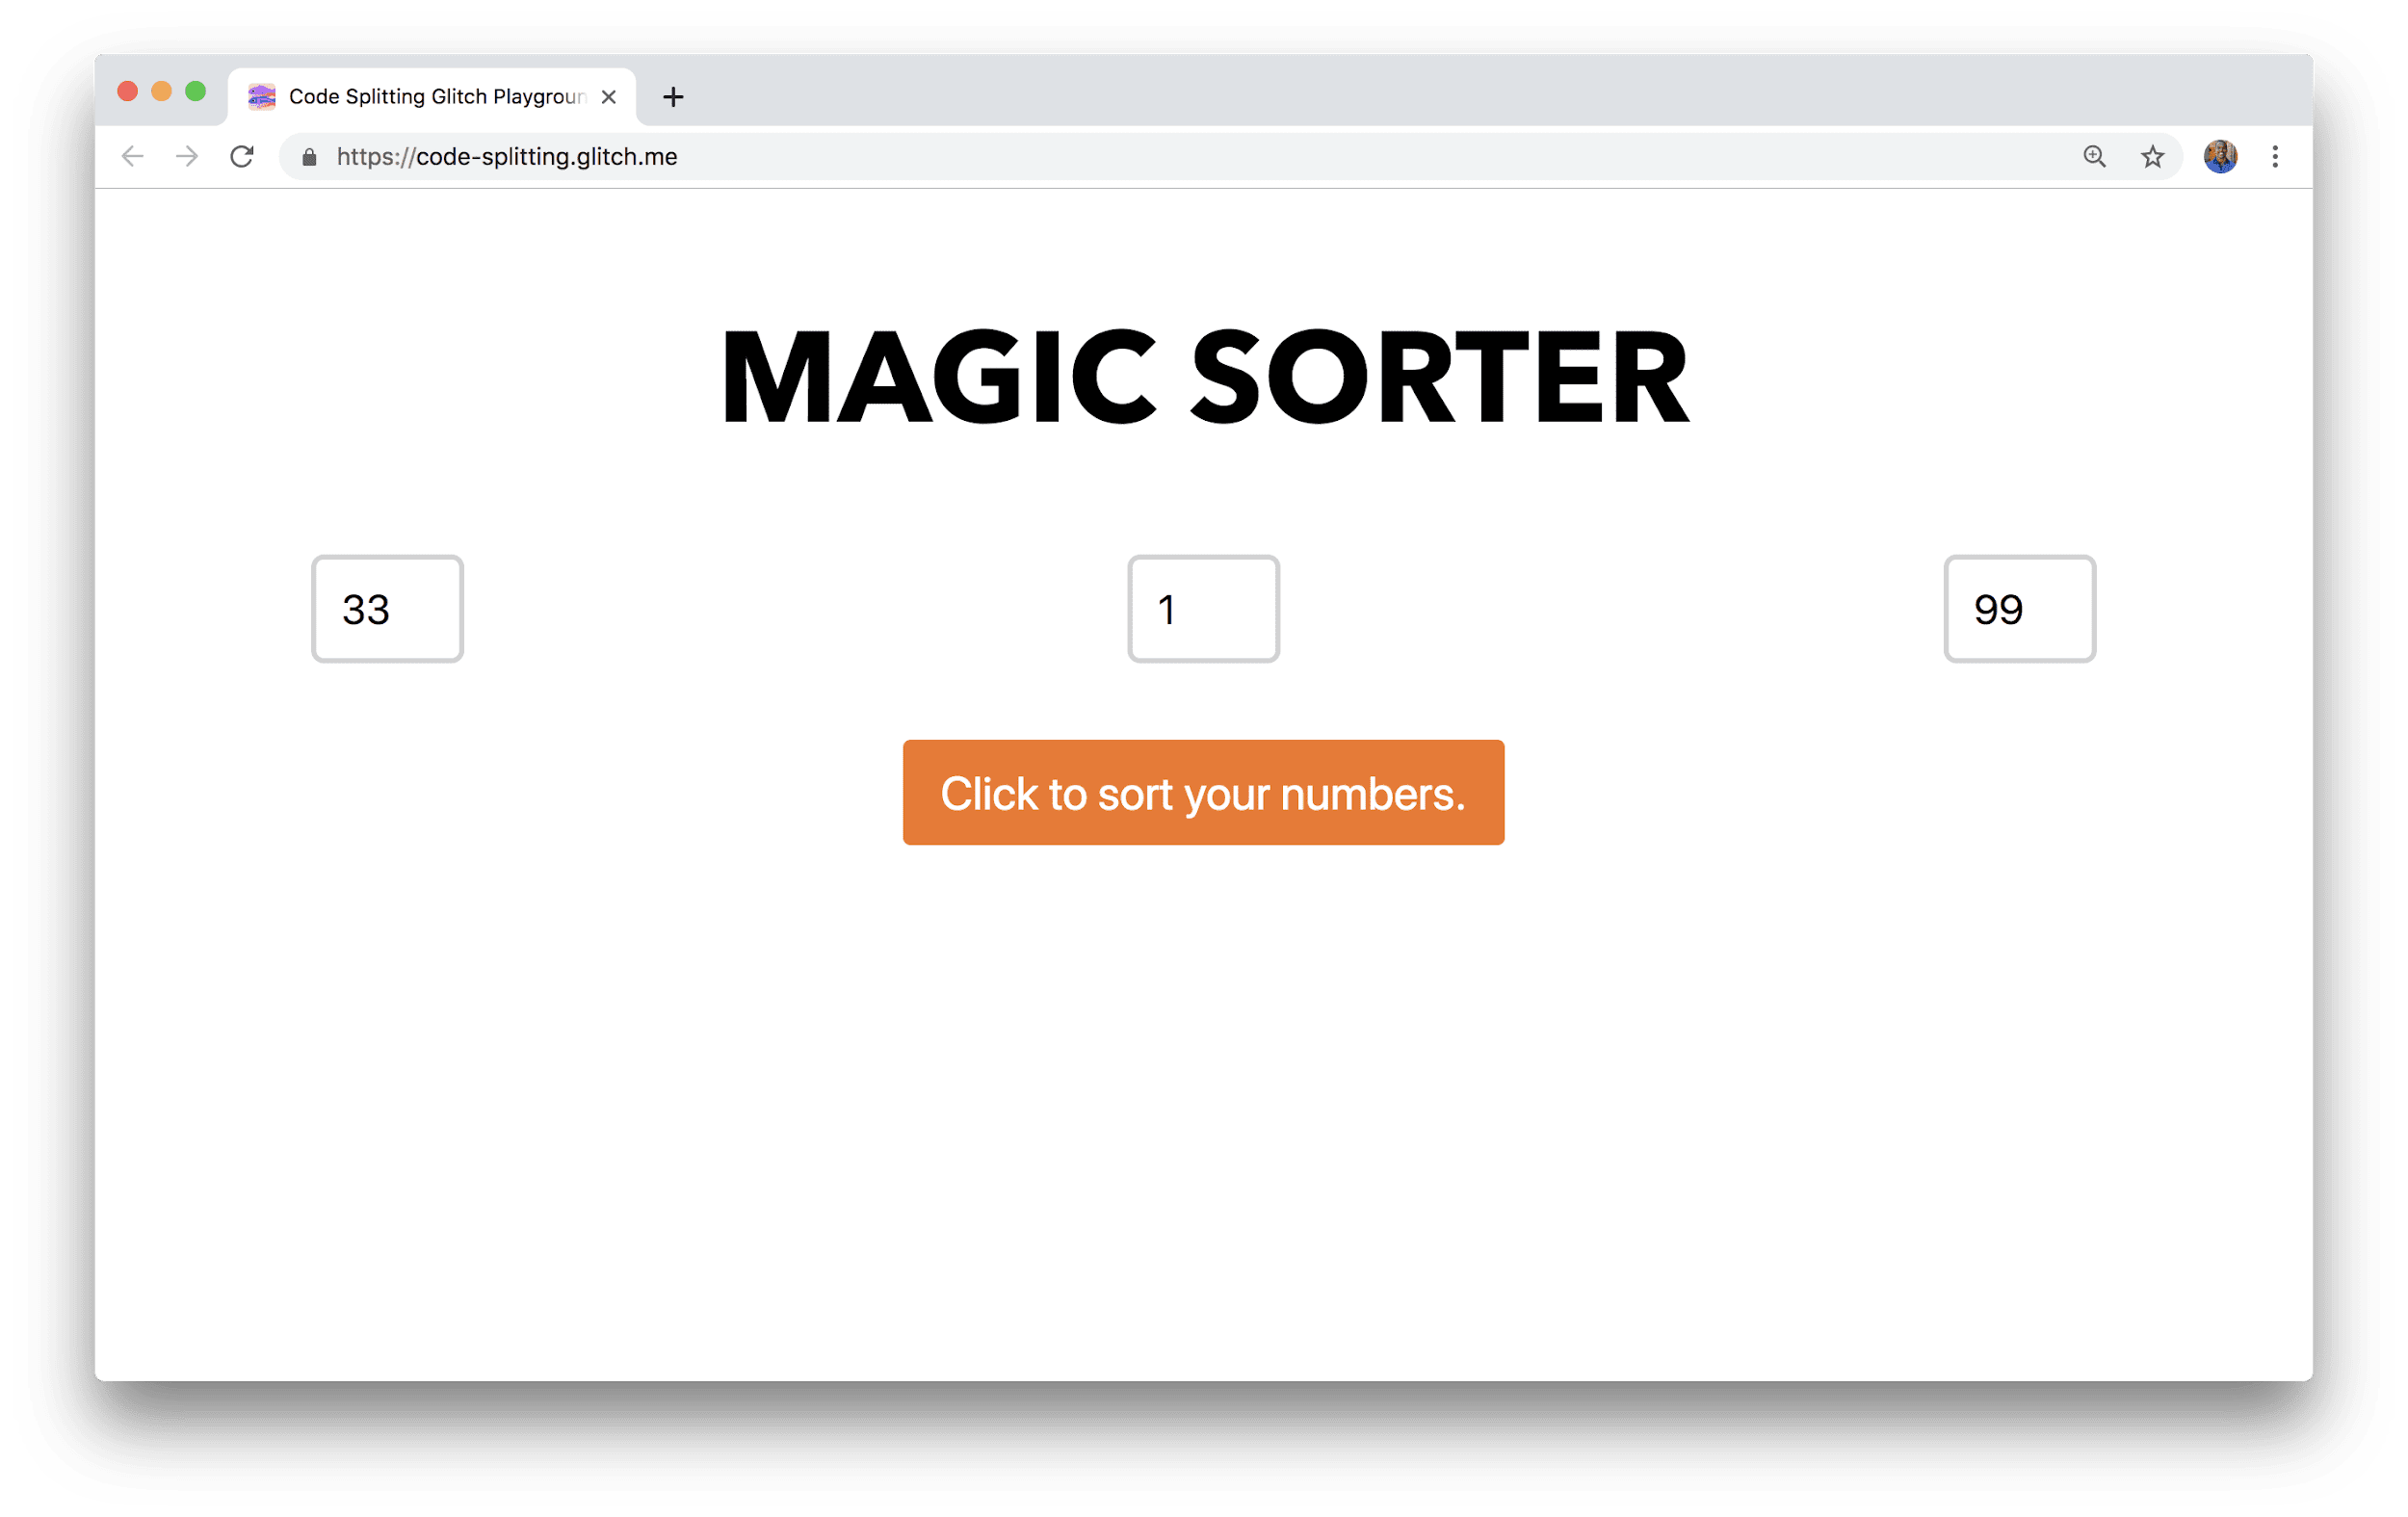 Jendela browser menampilkan aplikasi berjudul Magic Sorter dengan tiga kolom untuk memasukkan angka dan tombol urutkan.